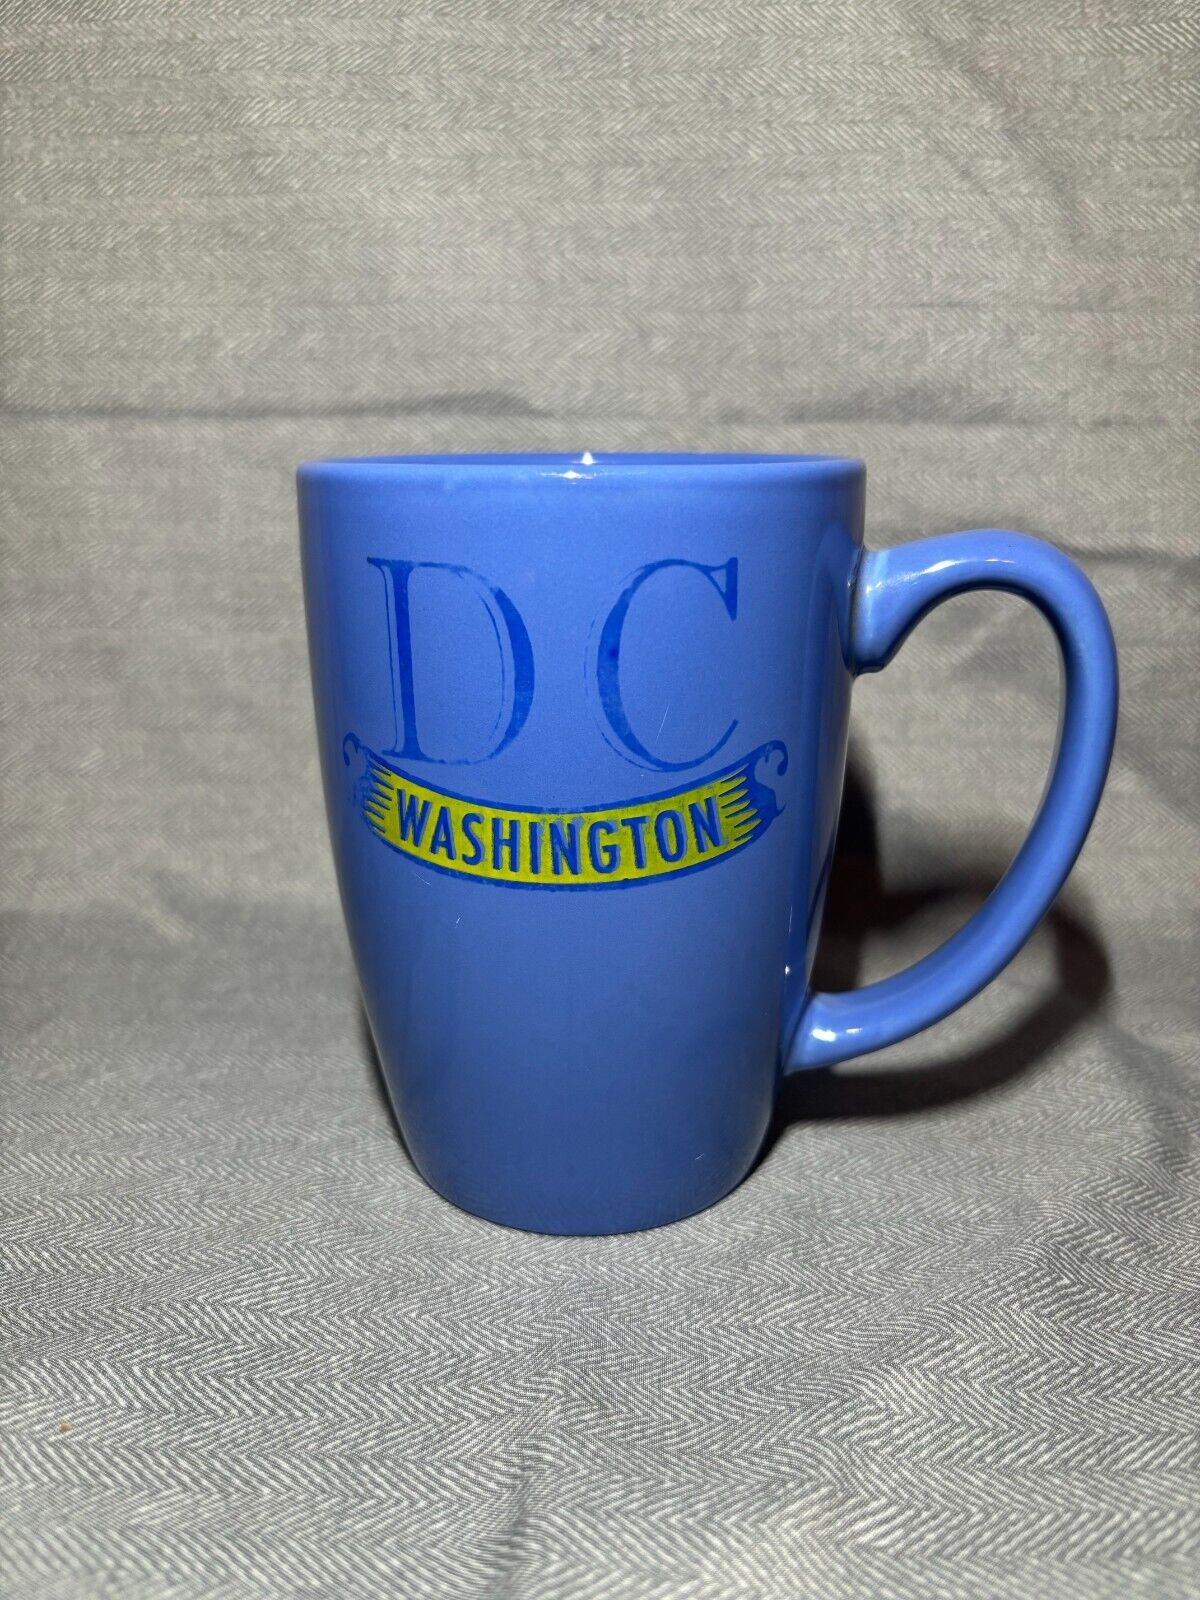 WASHINGTON DC BLUE CERAMIC COFFEE MUG